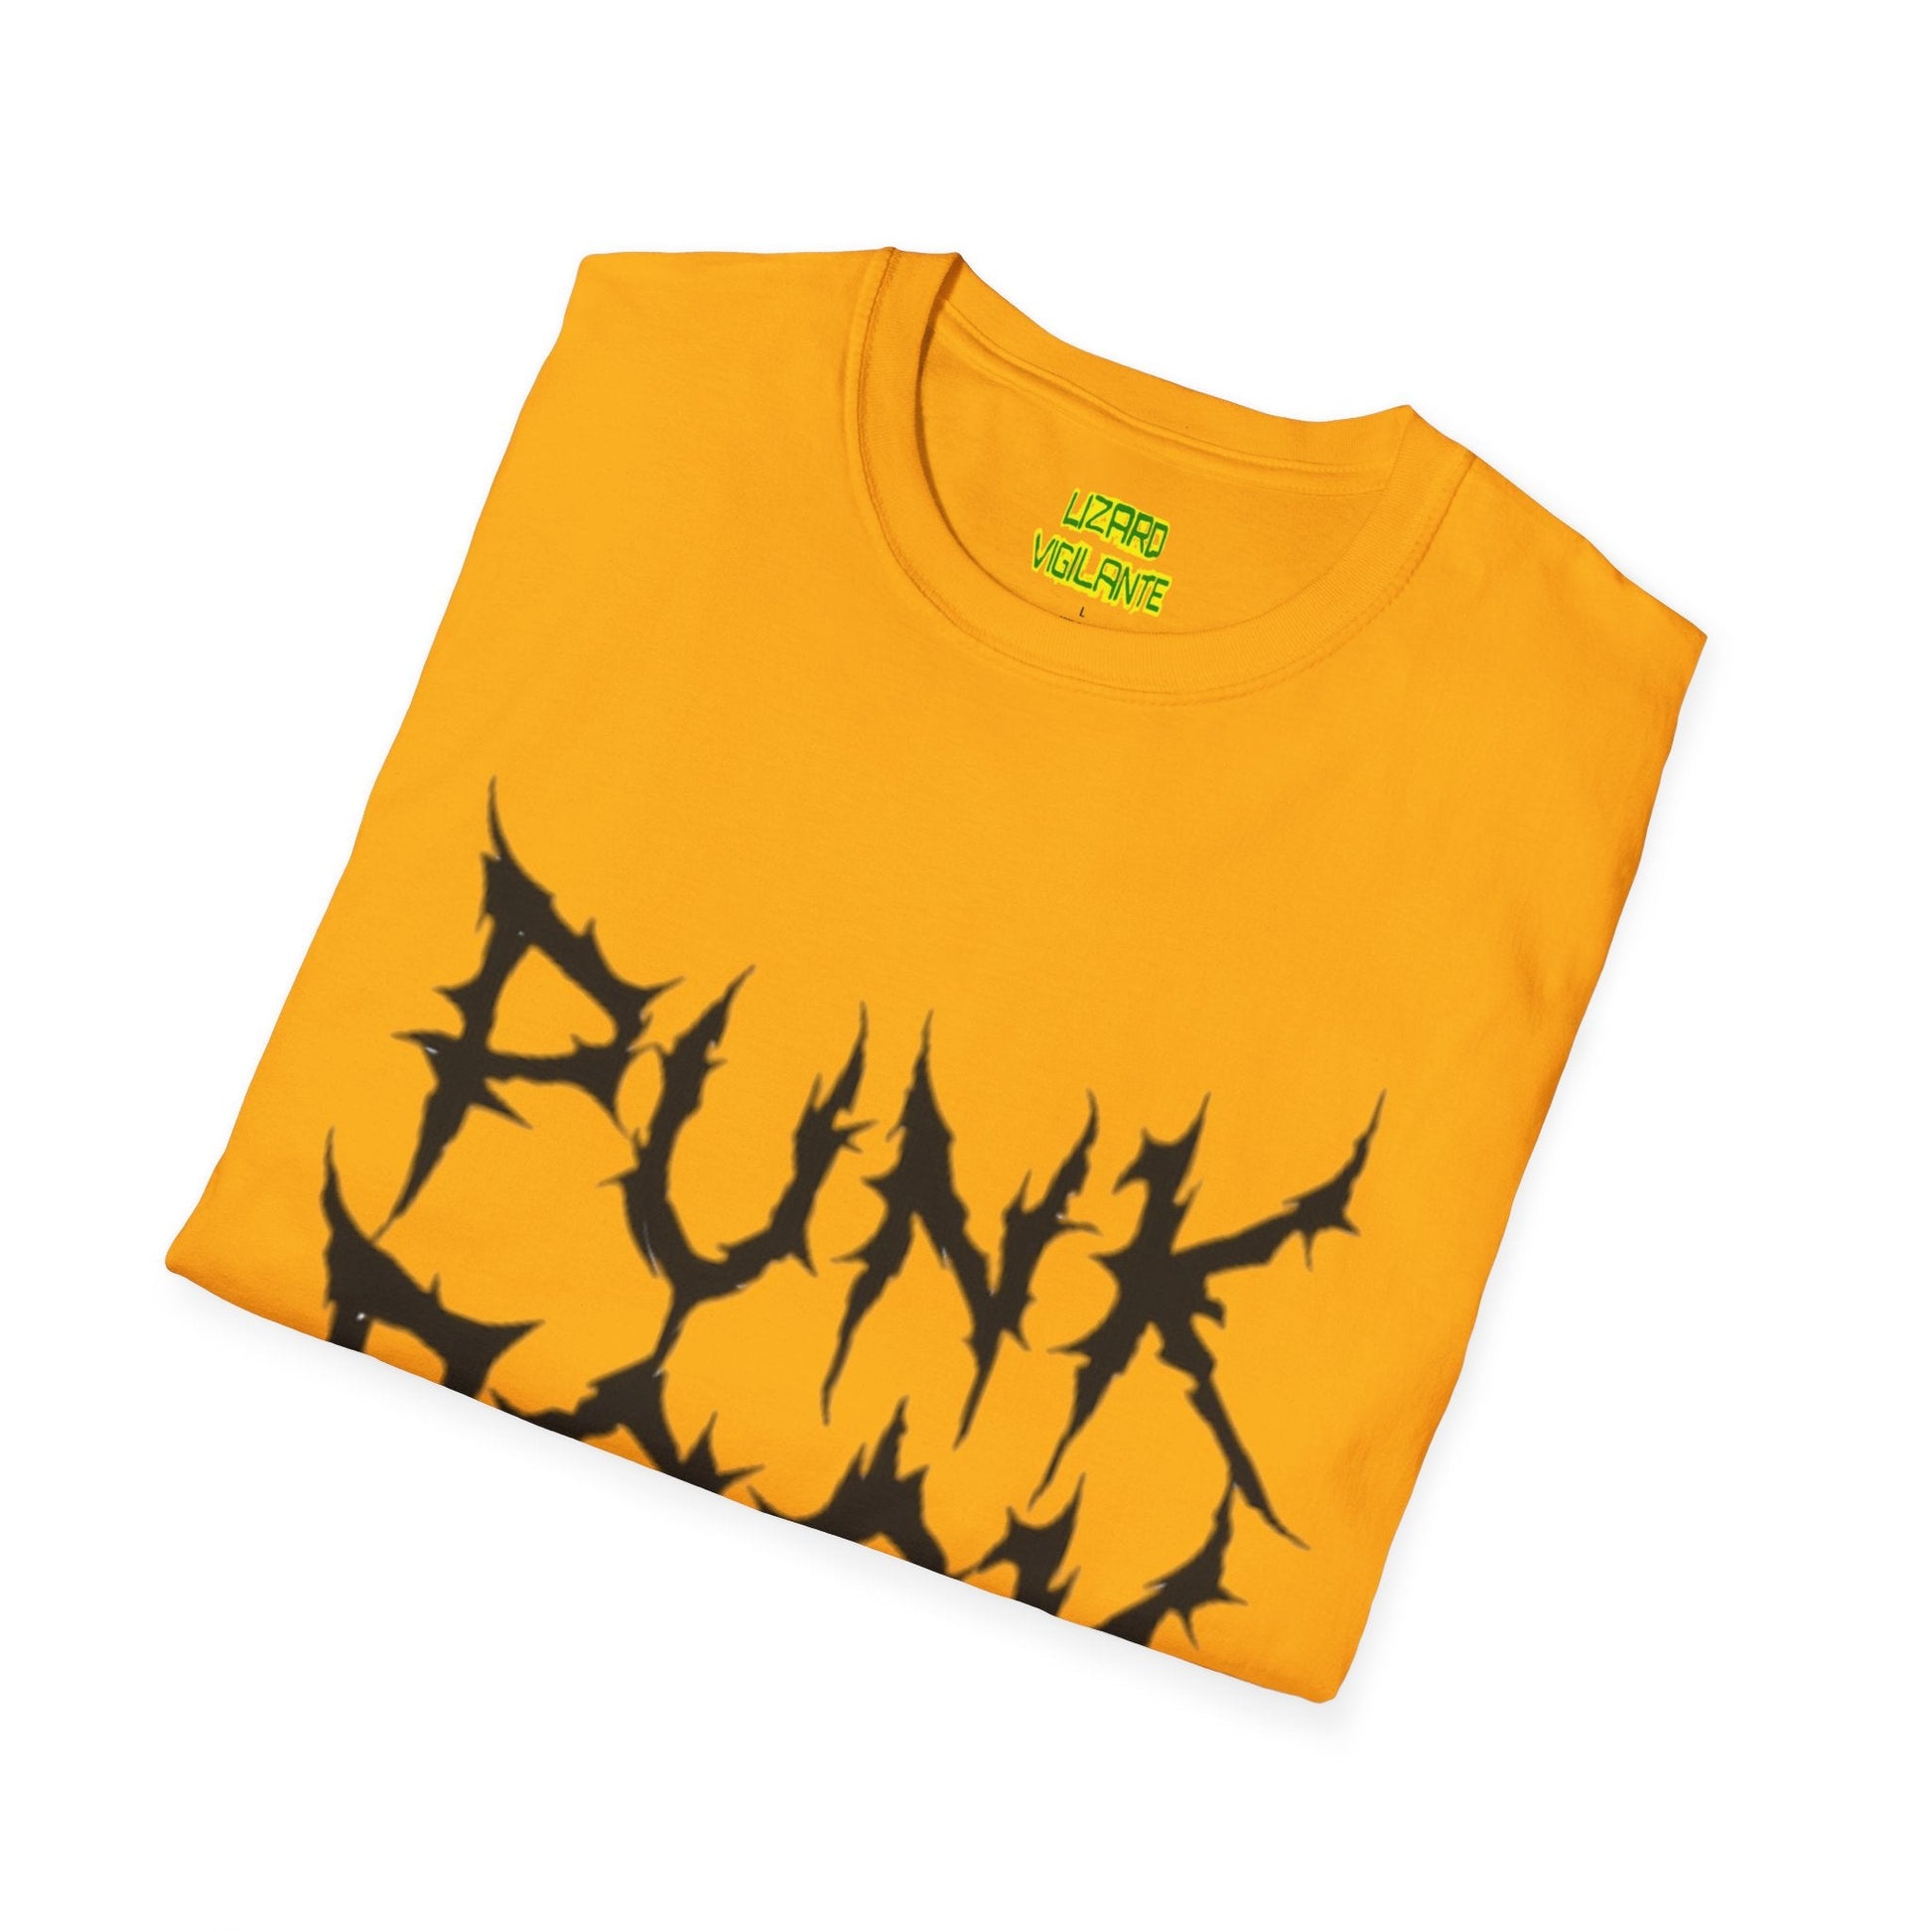 PUNK ROCK Unisex Softstyle T-Shirt - Lizard Vigilante